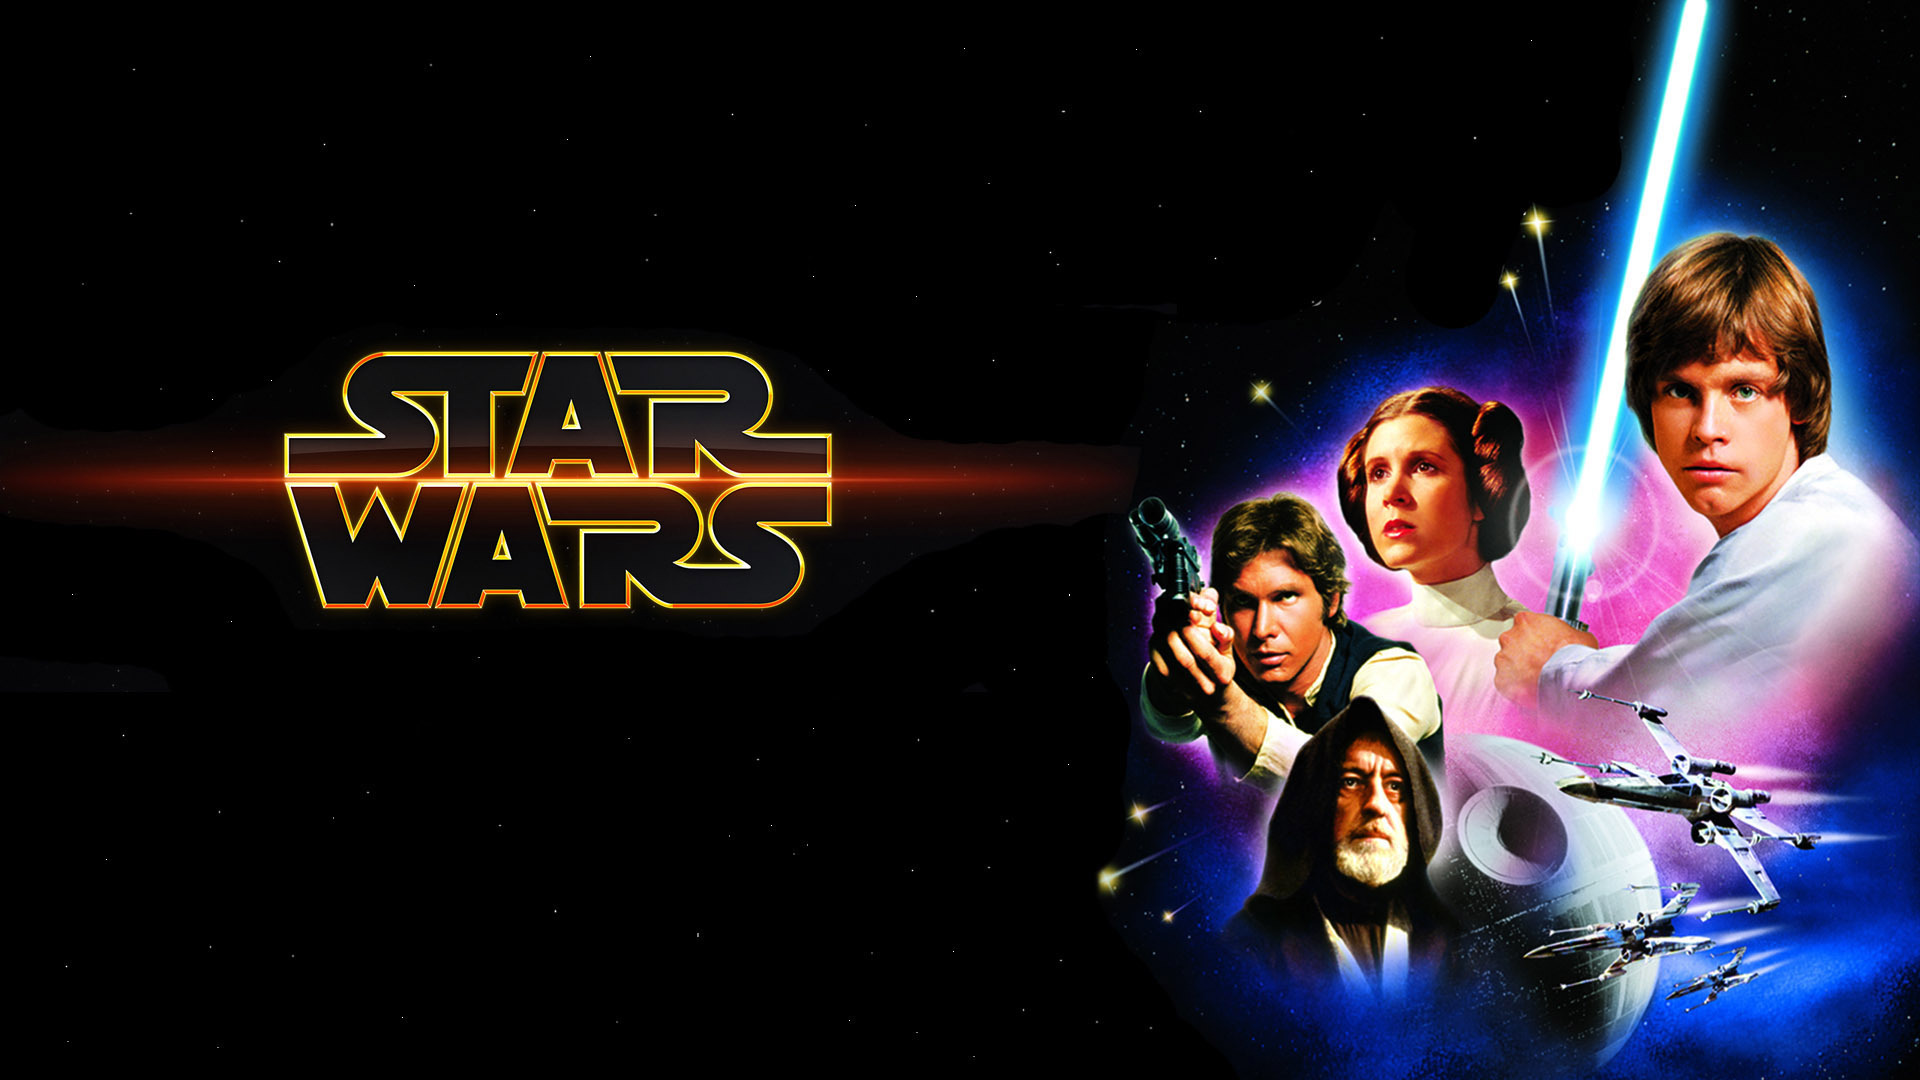 Star Wars Episode IV A New Hope Wallpaper 4